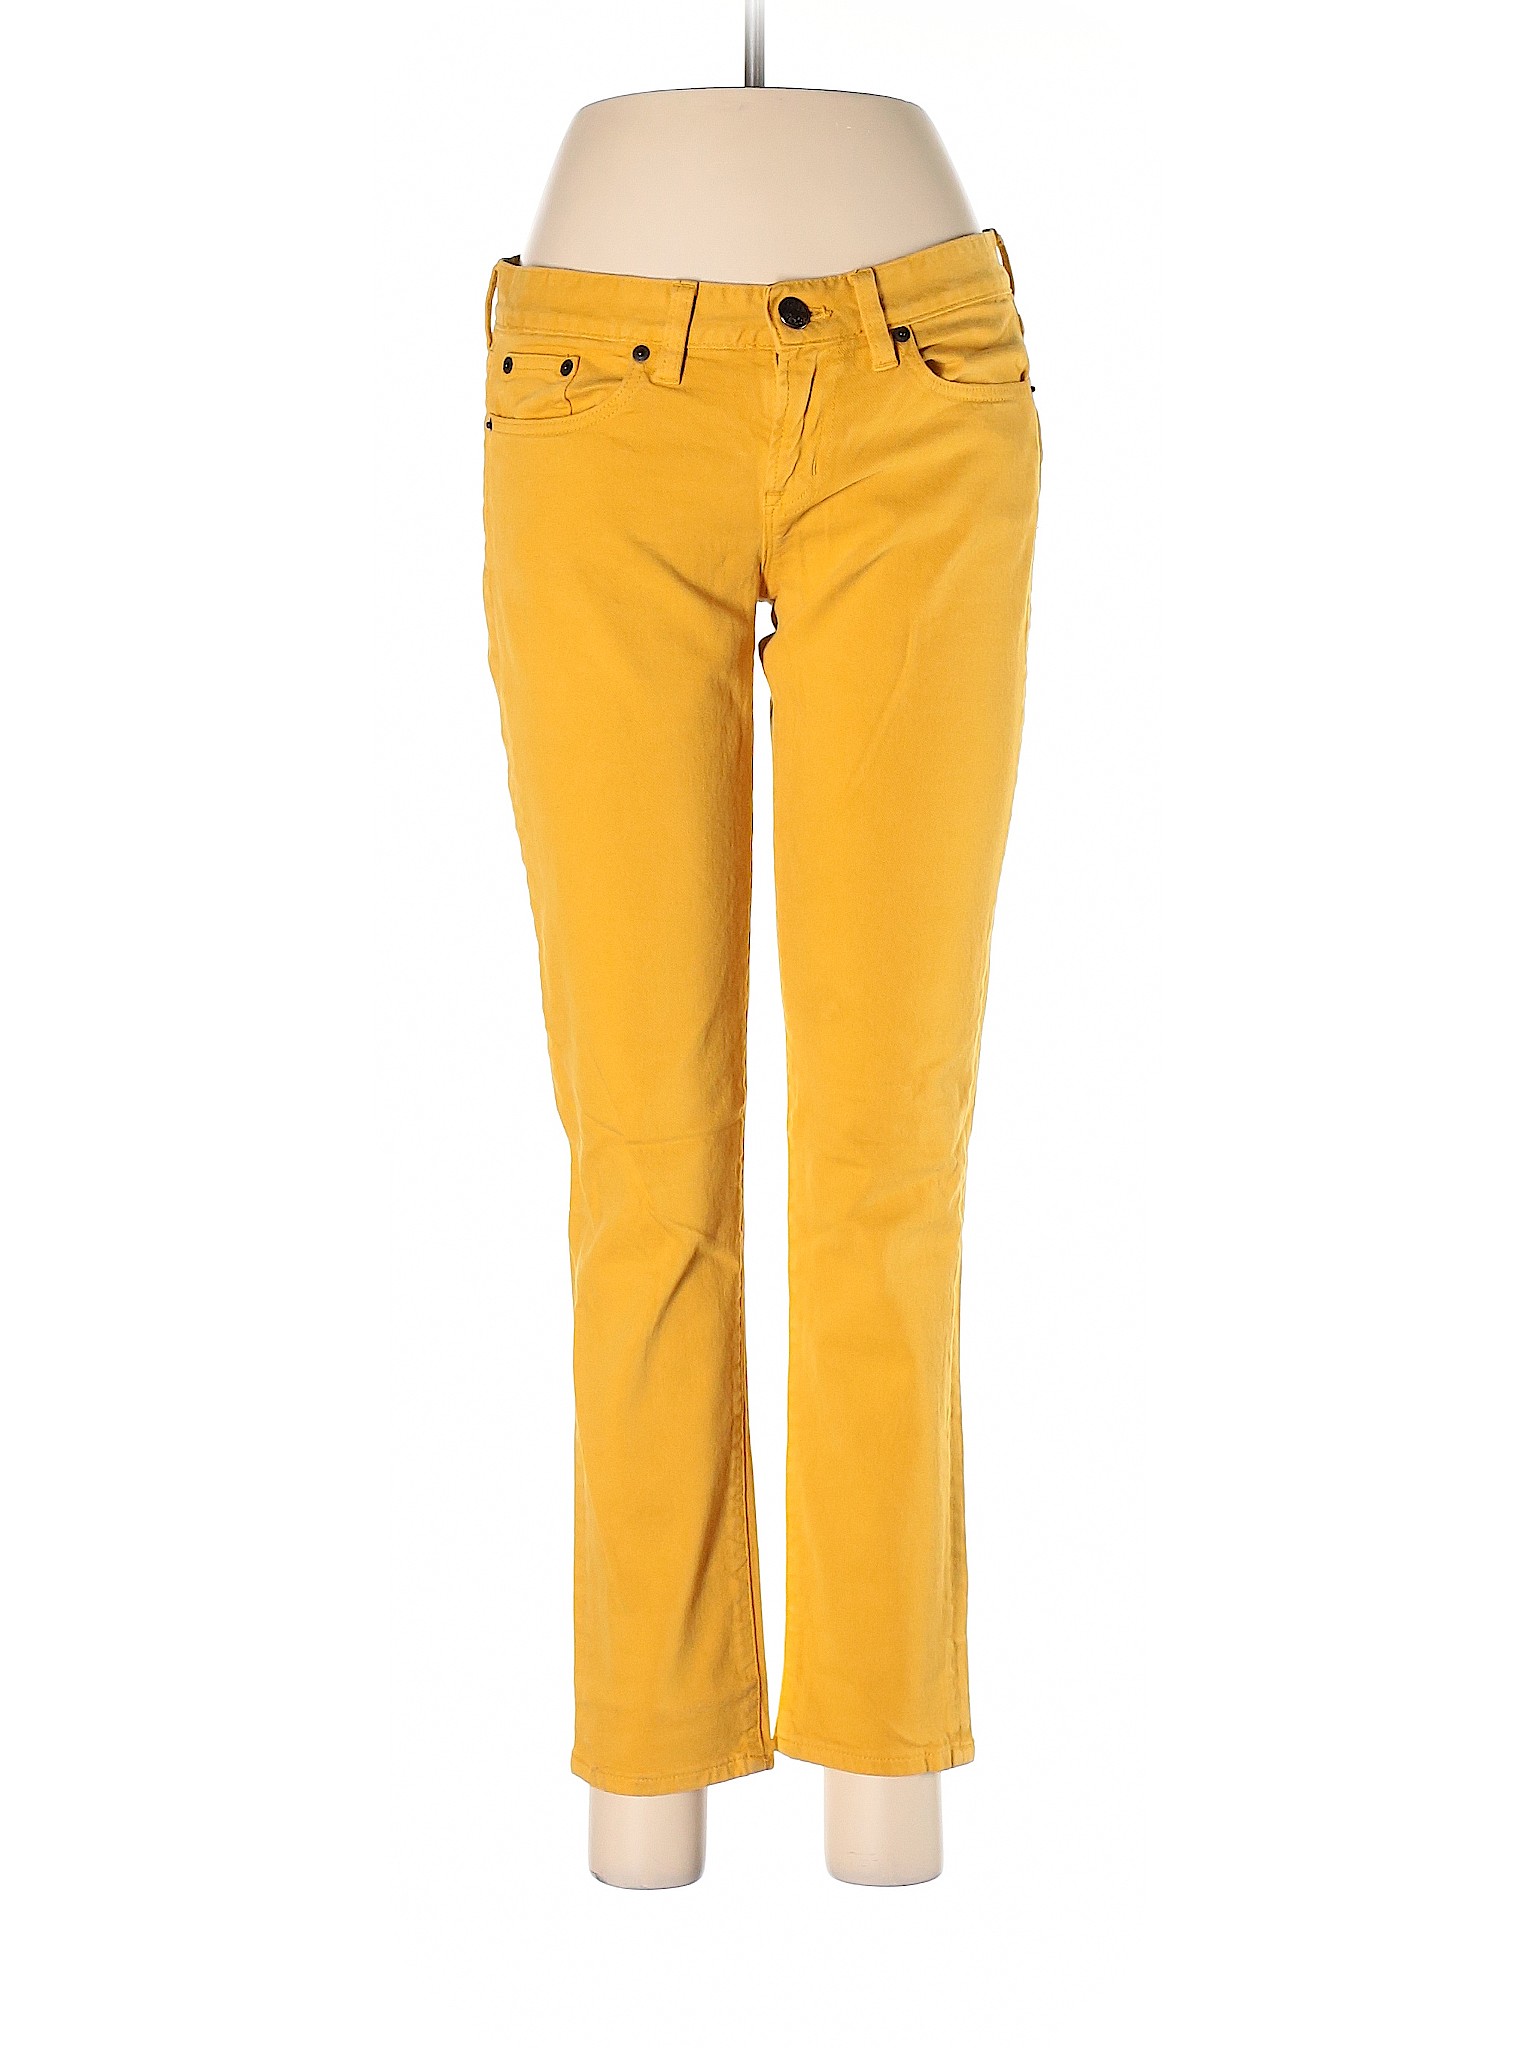 J.Crew Women Yellow Jeans 28W | eBay